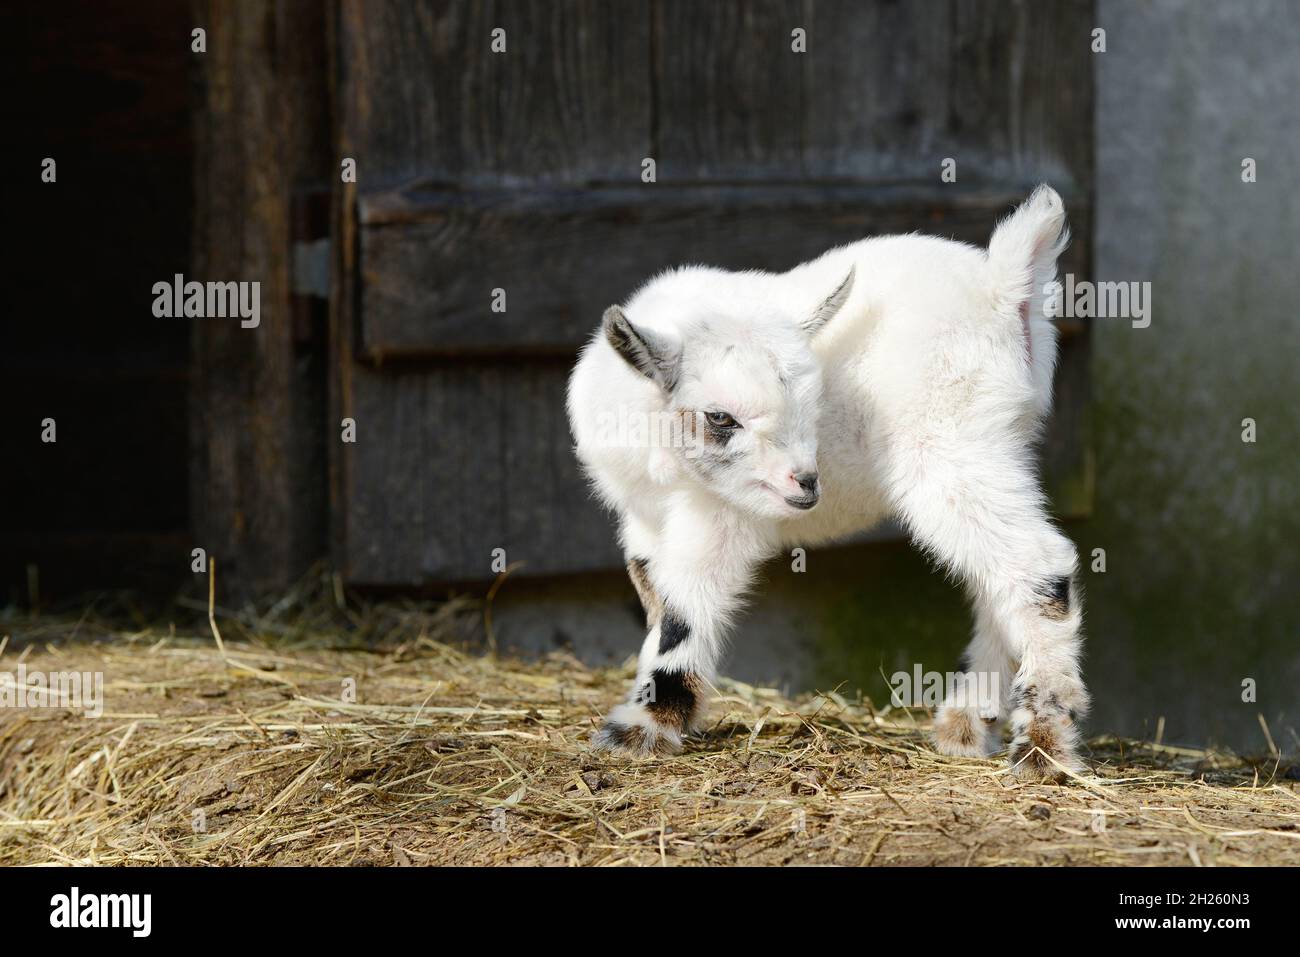 white goat kid standing on straw Stock Photo